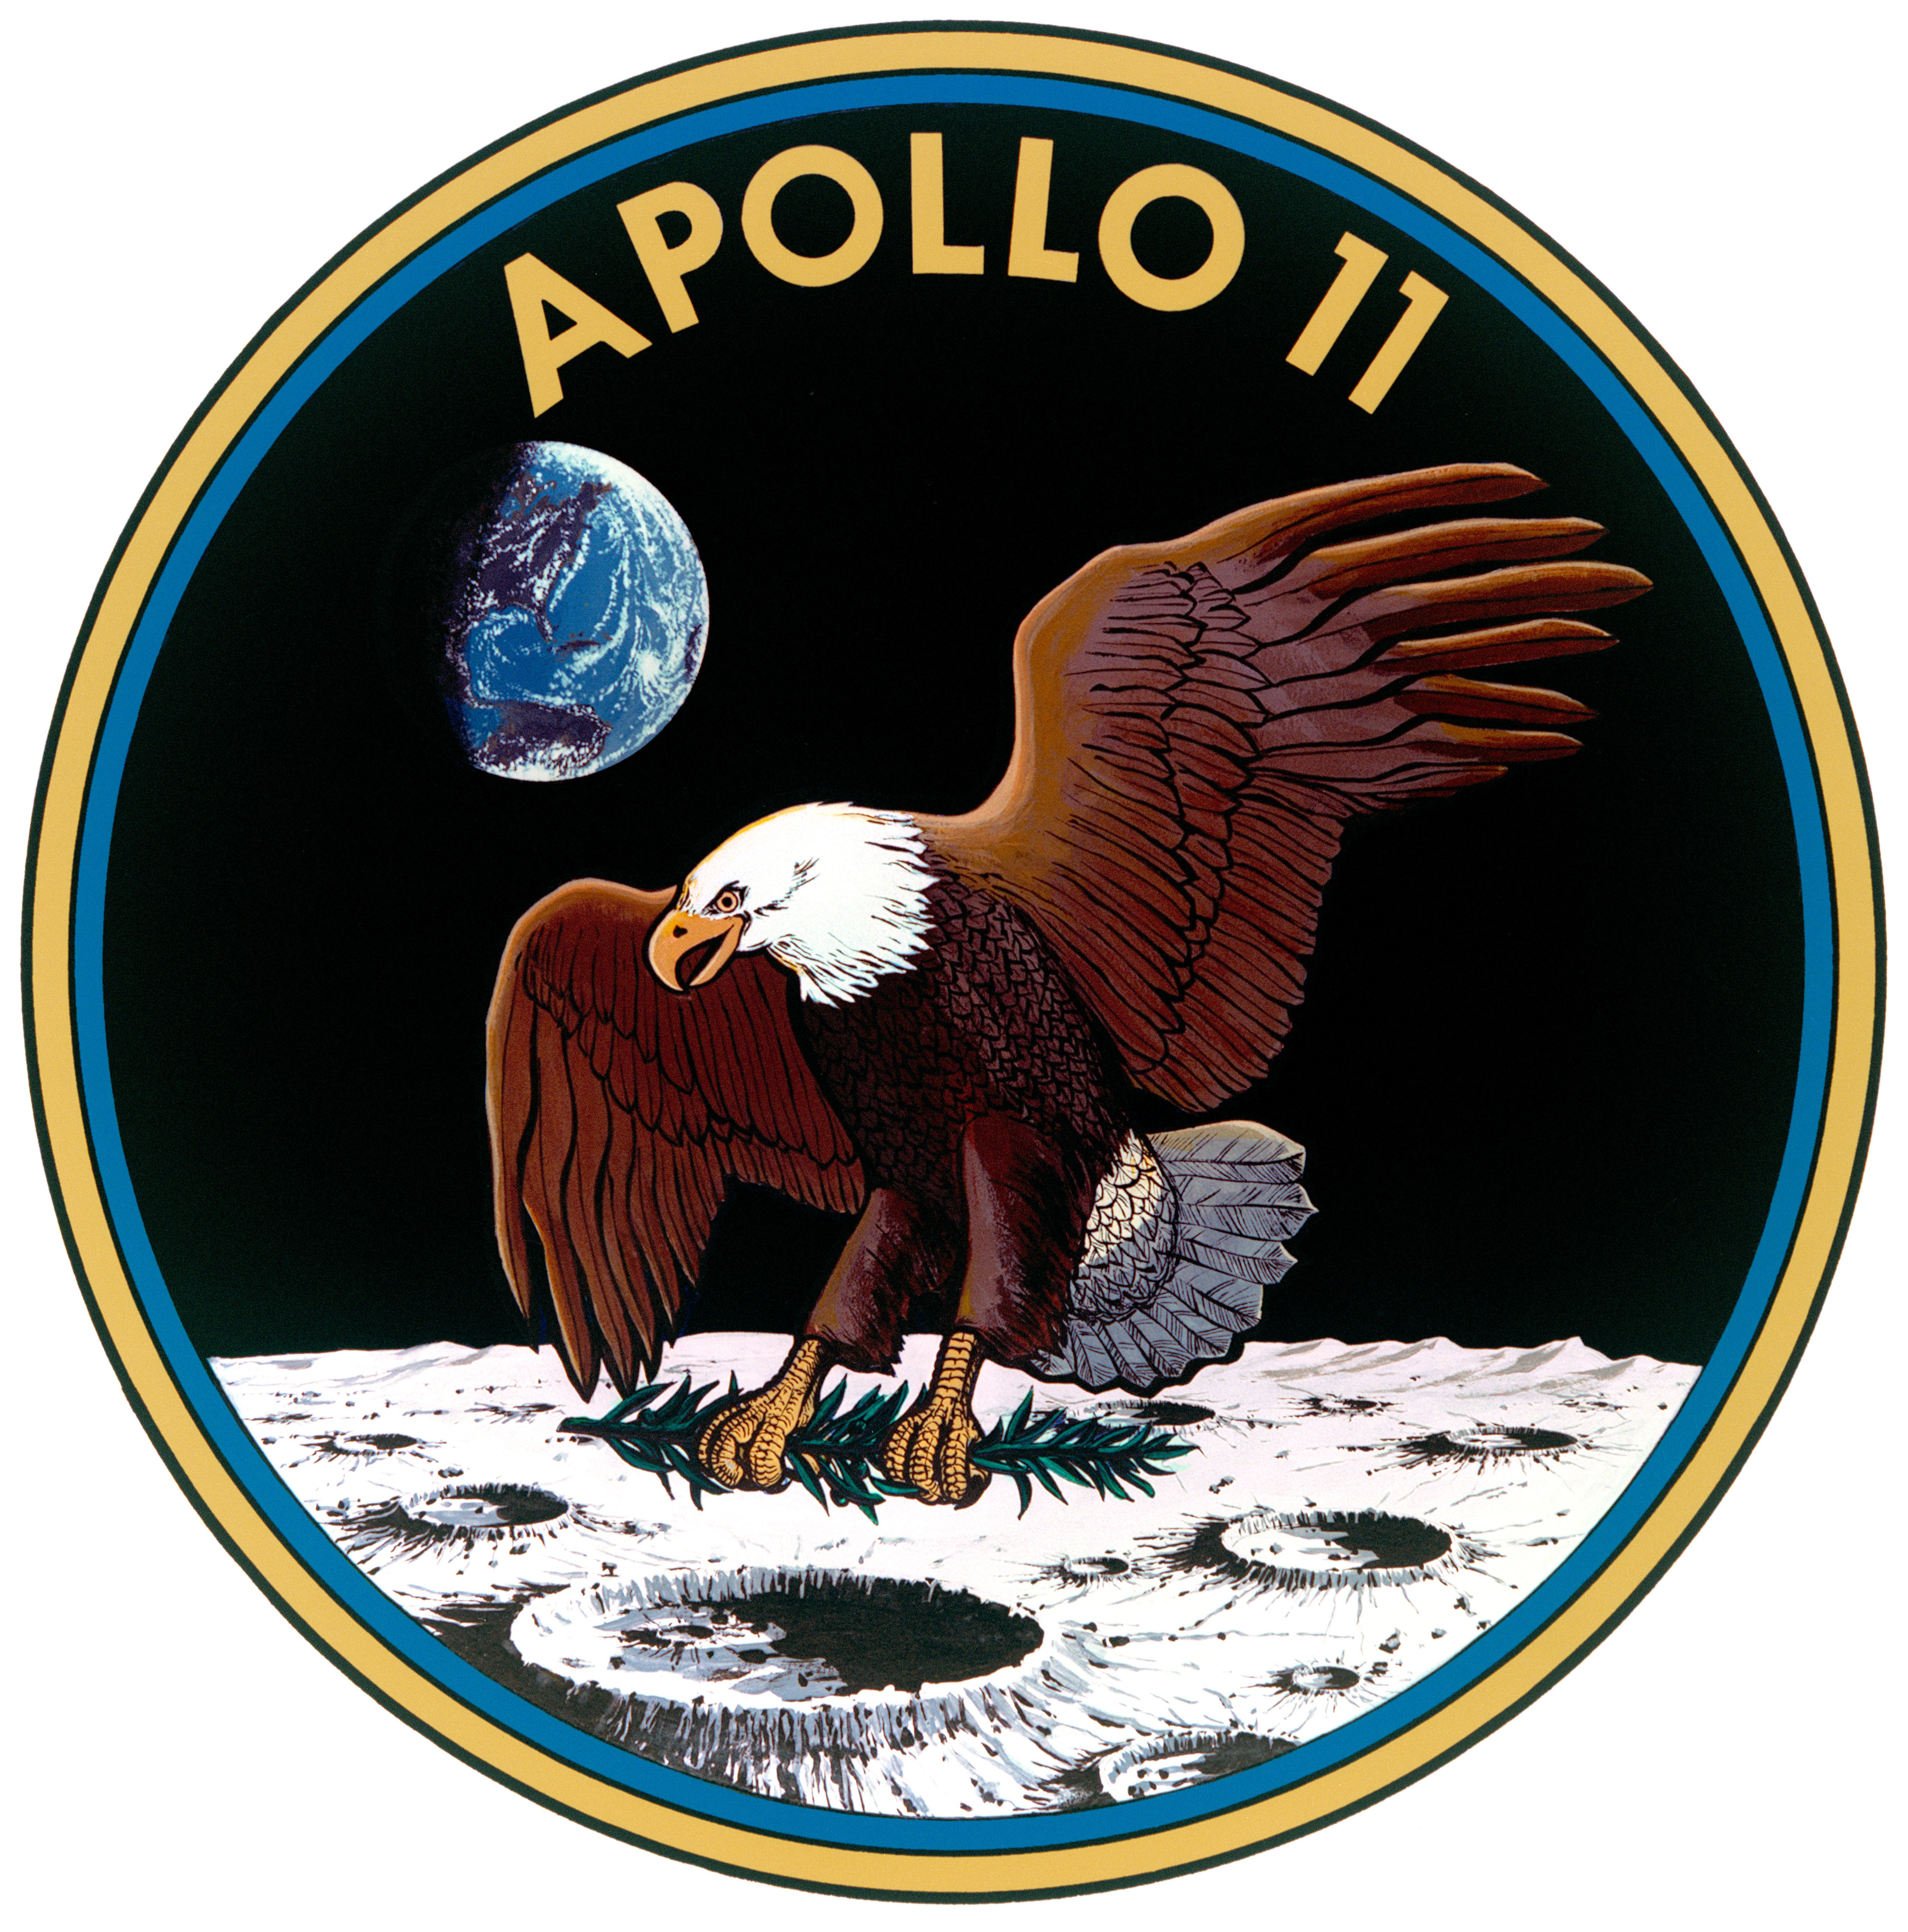 The Apollo 11 patch